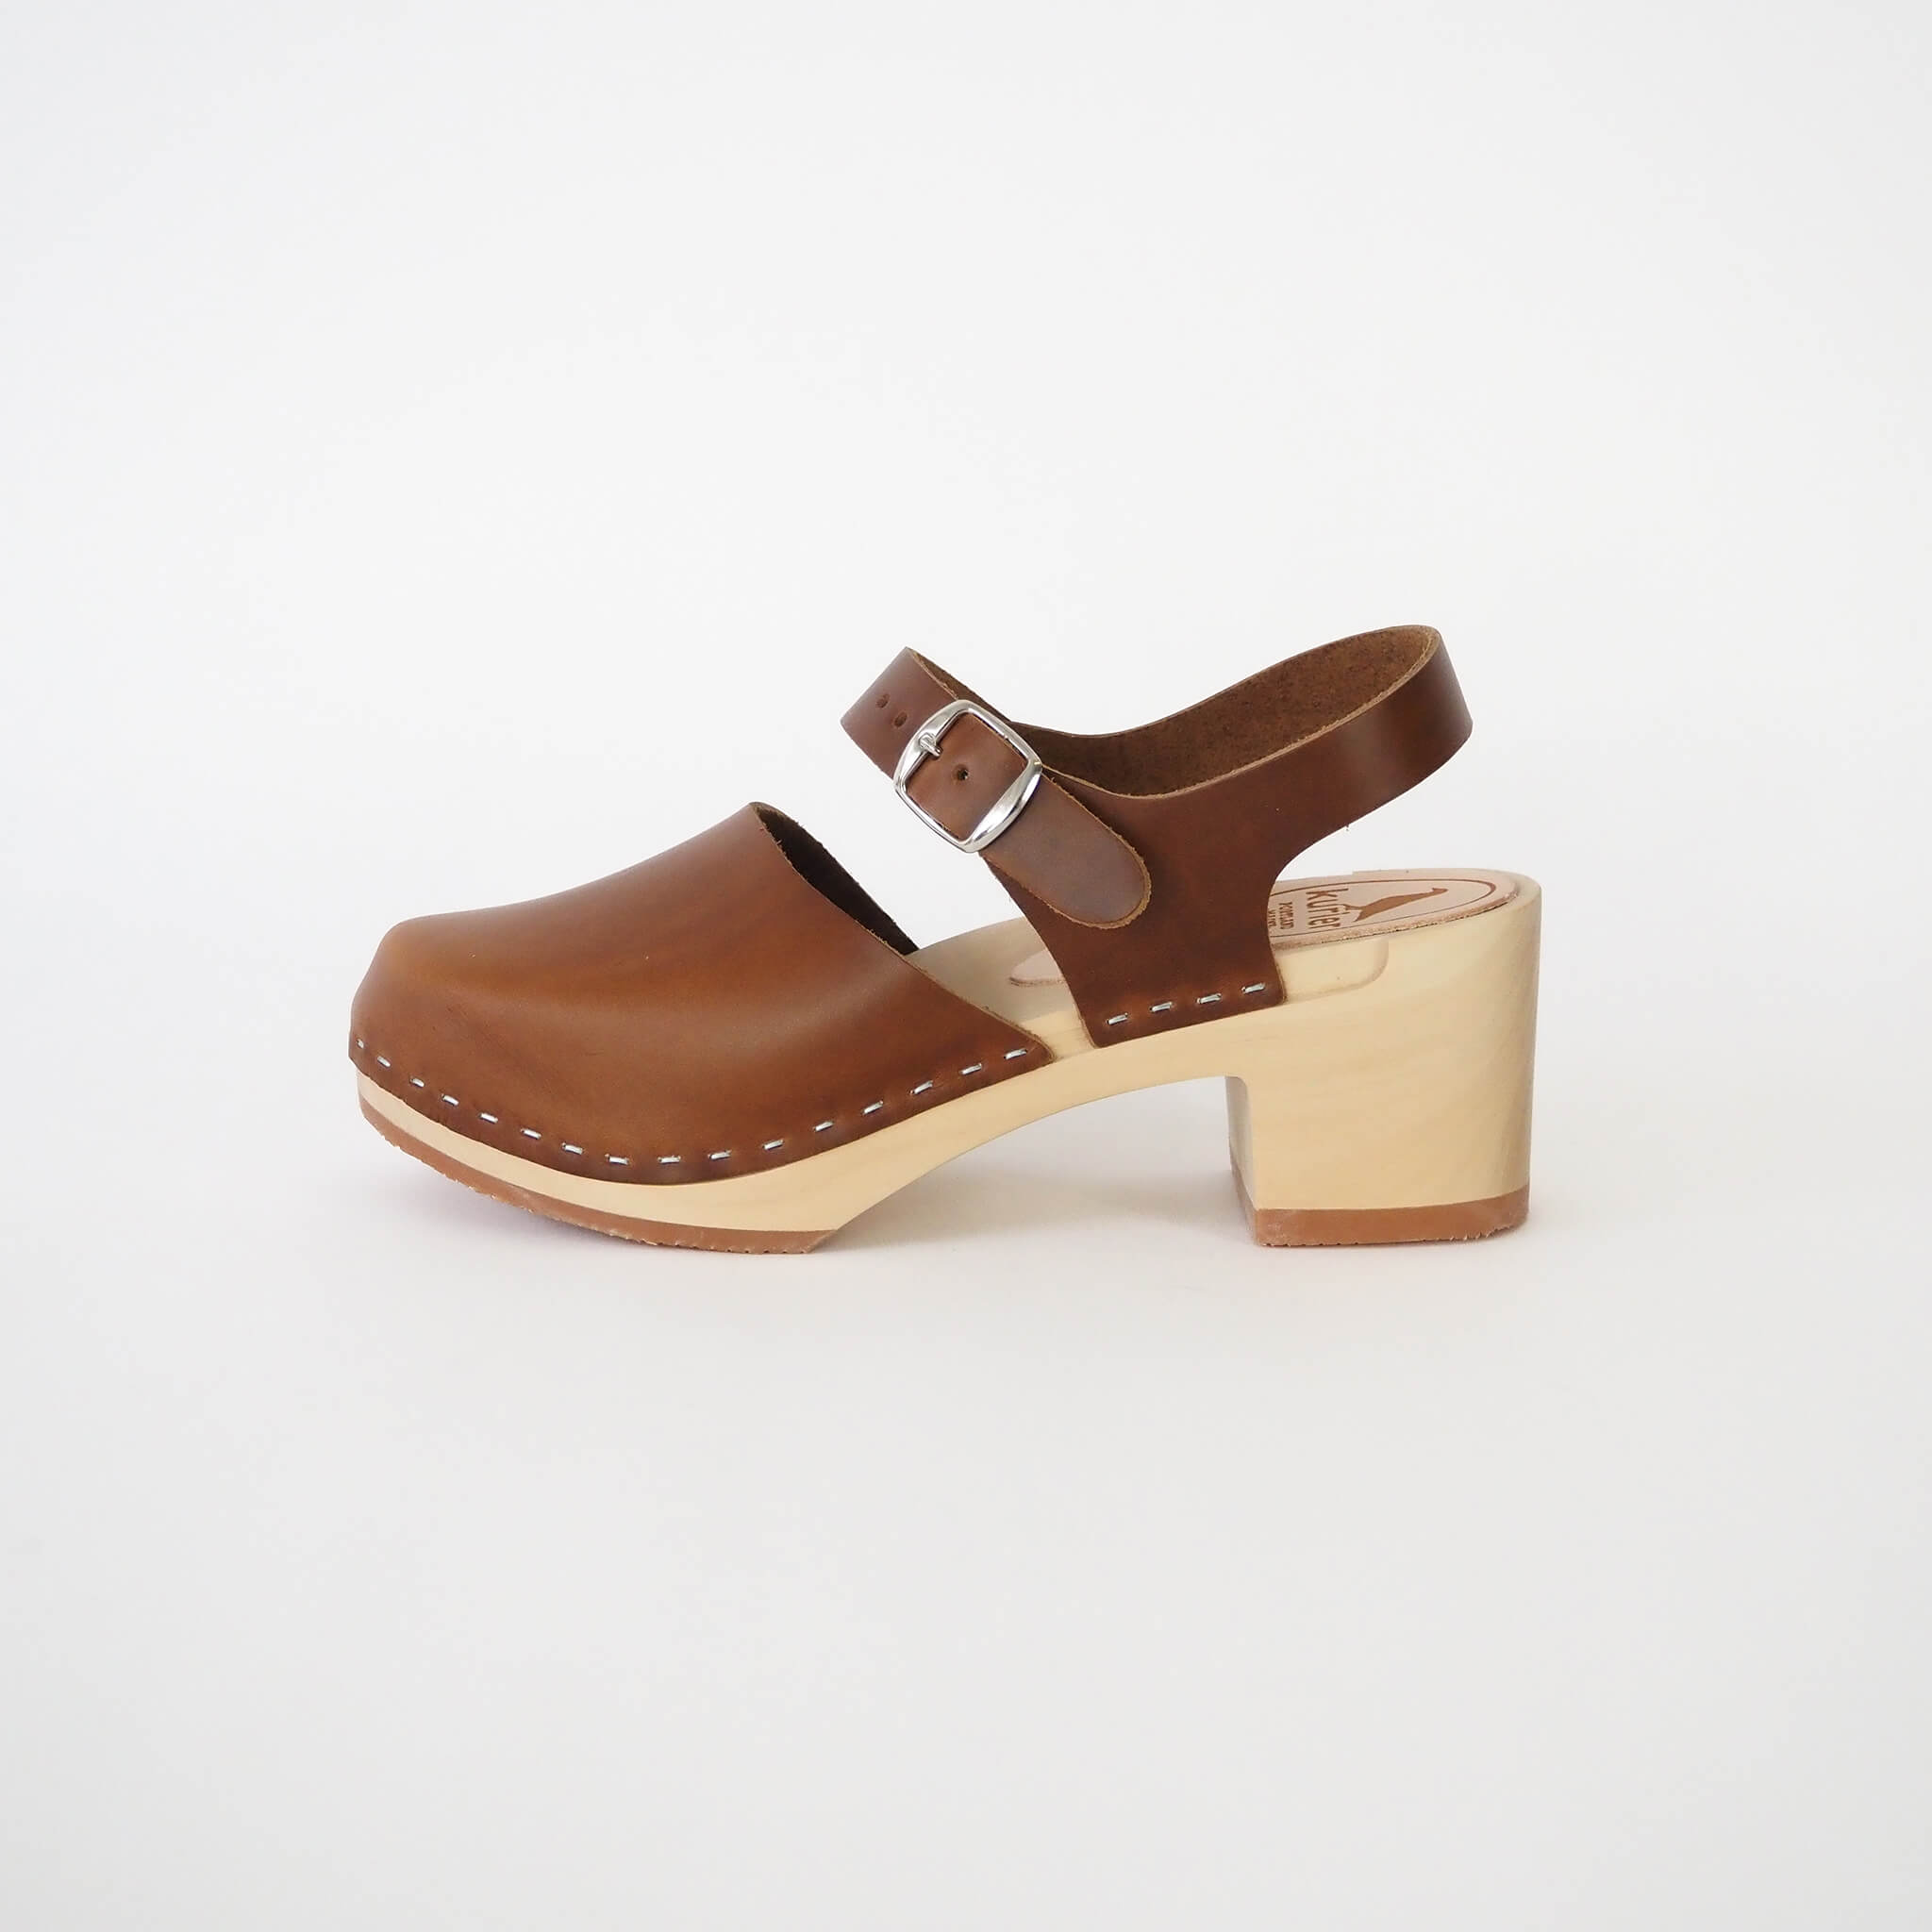 charlie clog high heel closed toe handmade leather/wood - pecan side view